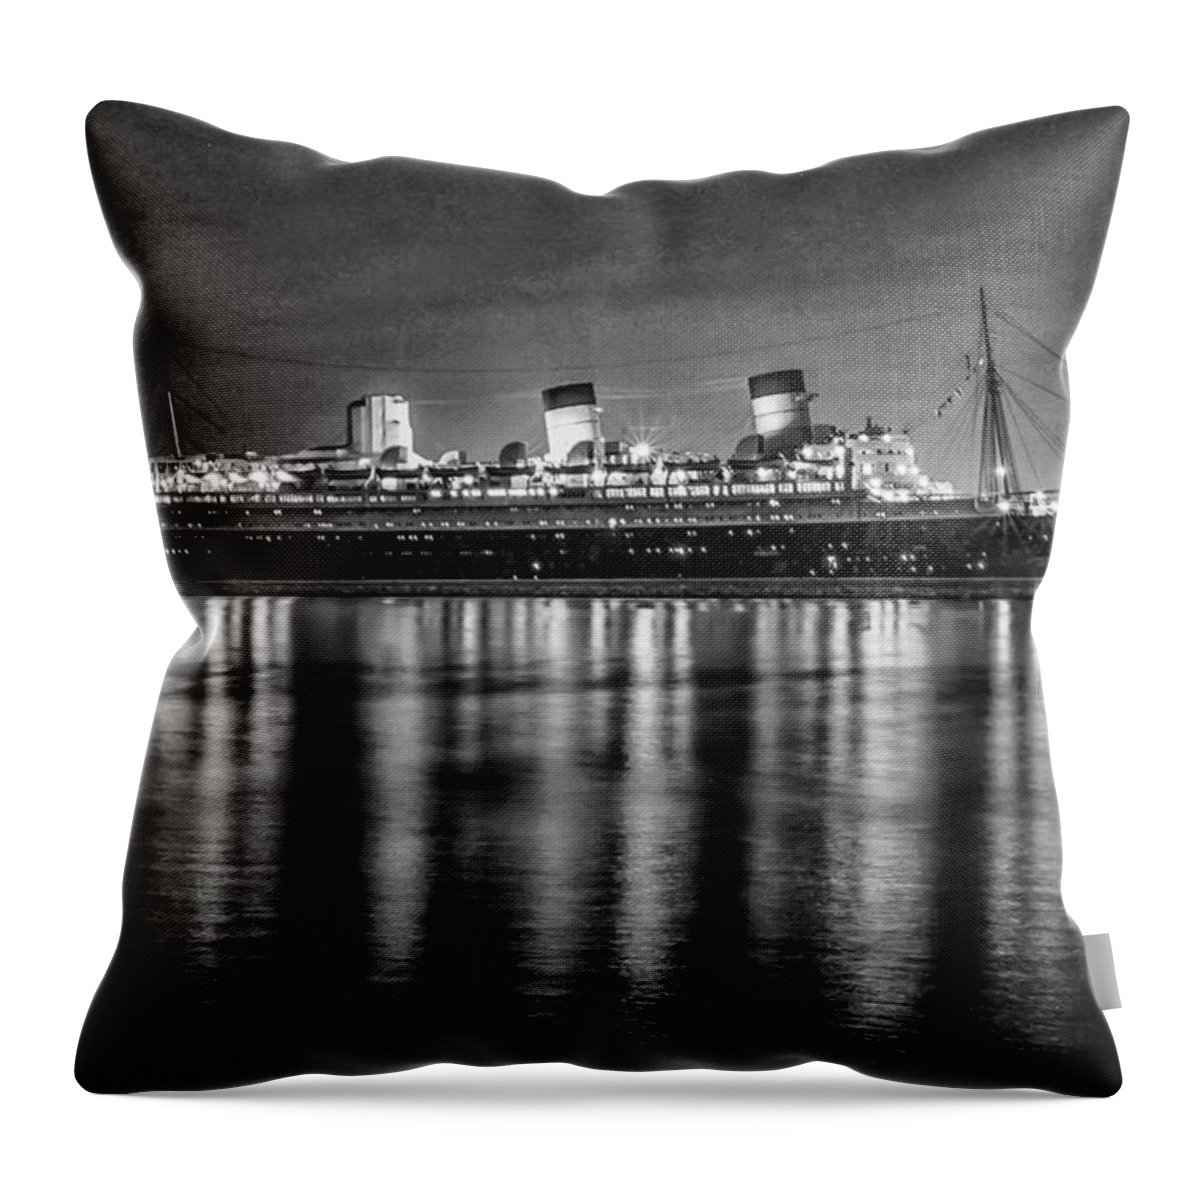 Queen Mary Throw Pillow featuring the photograph Queen Mary by Robert Hebert